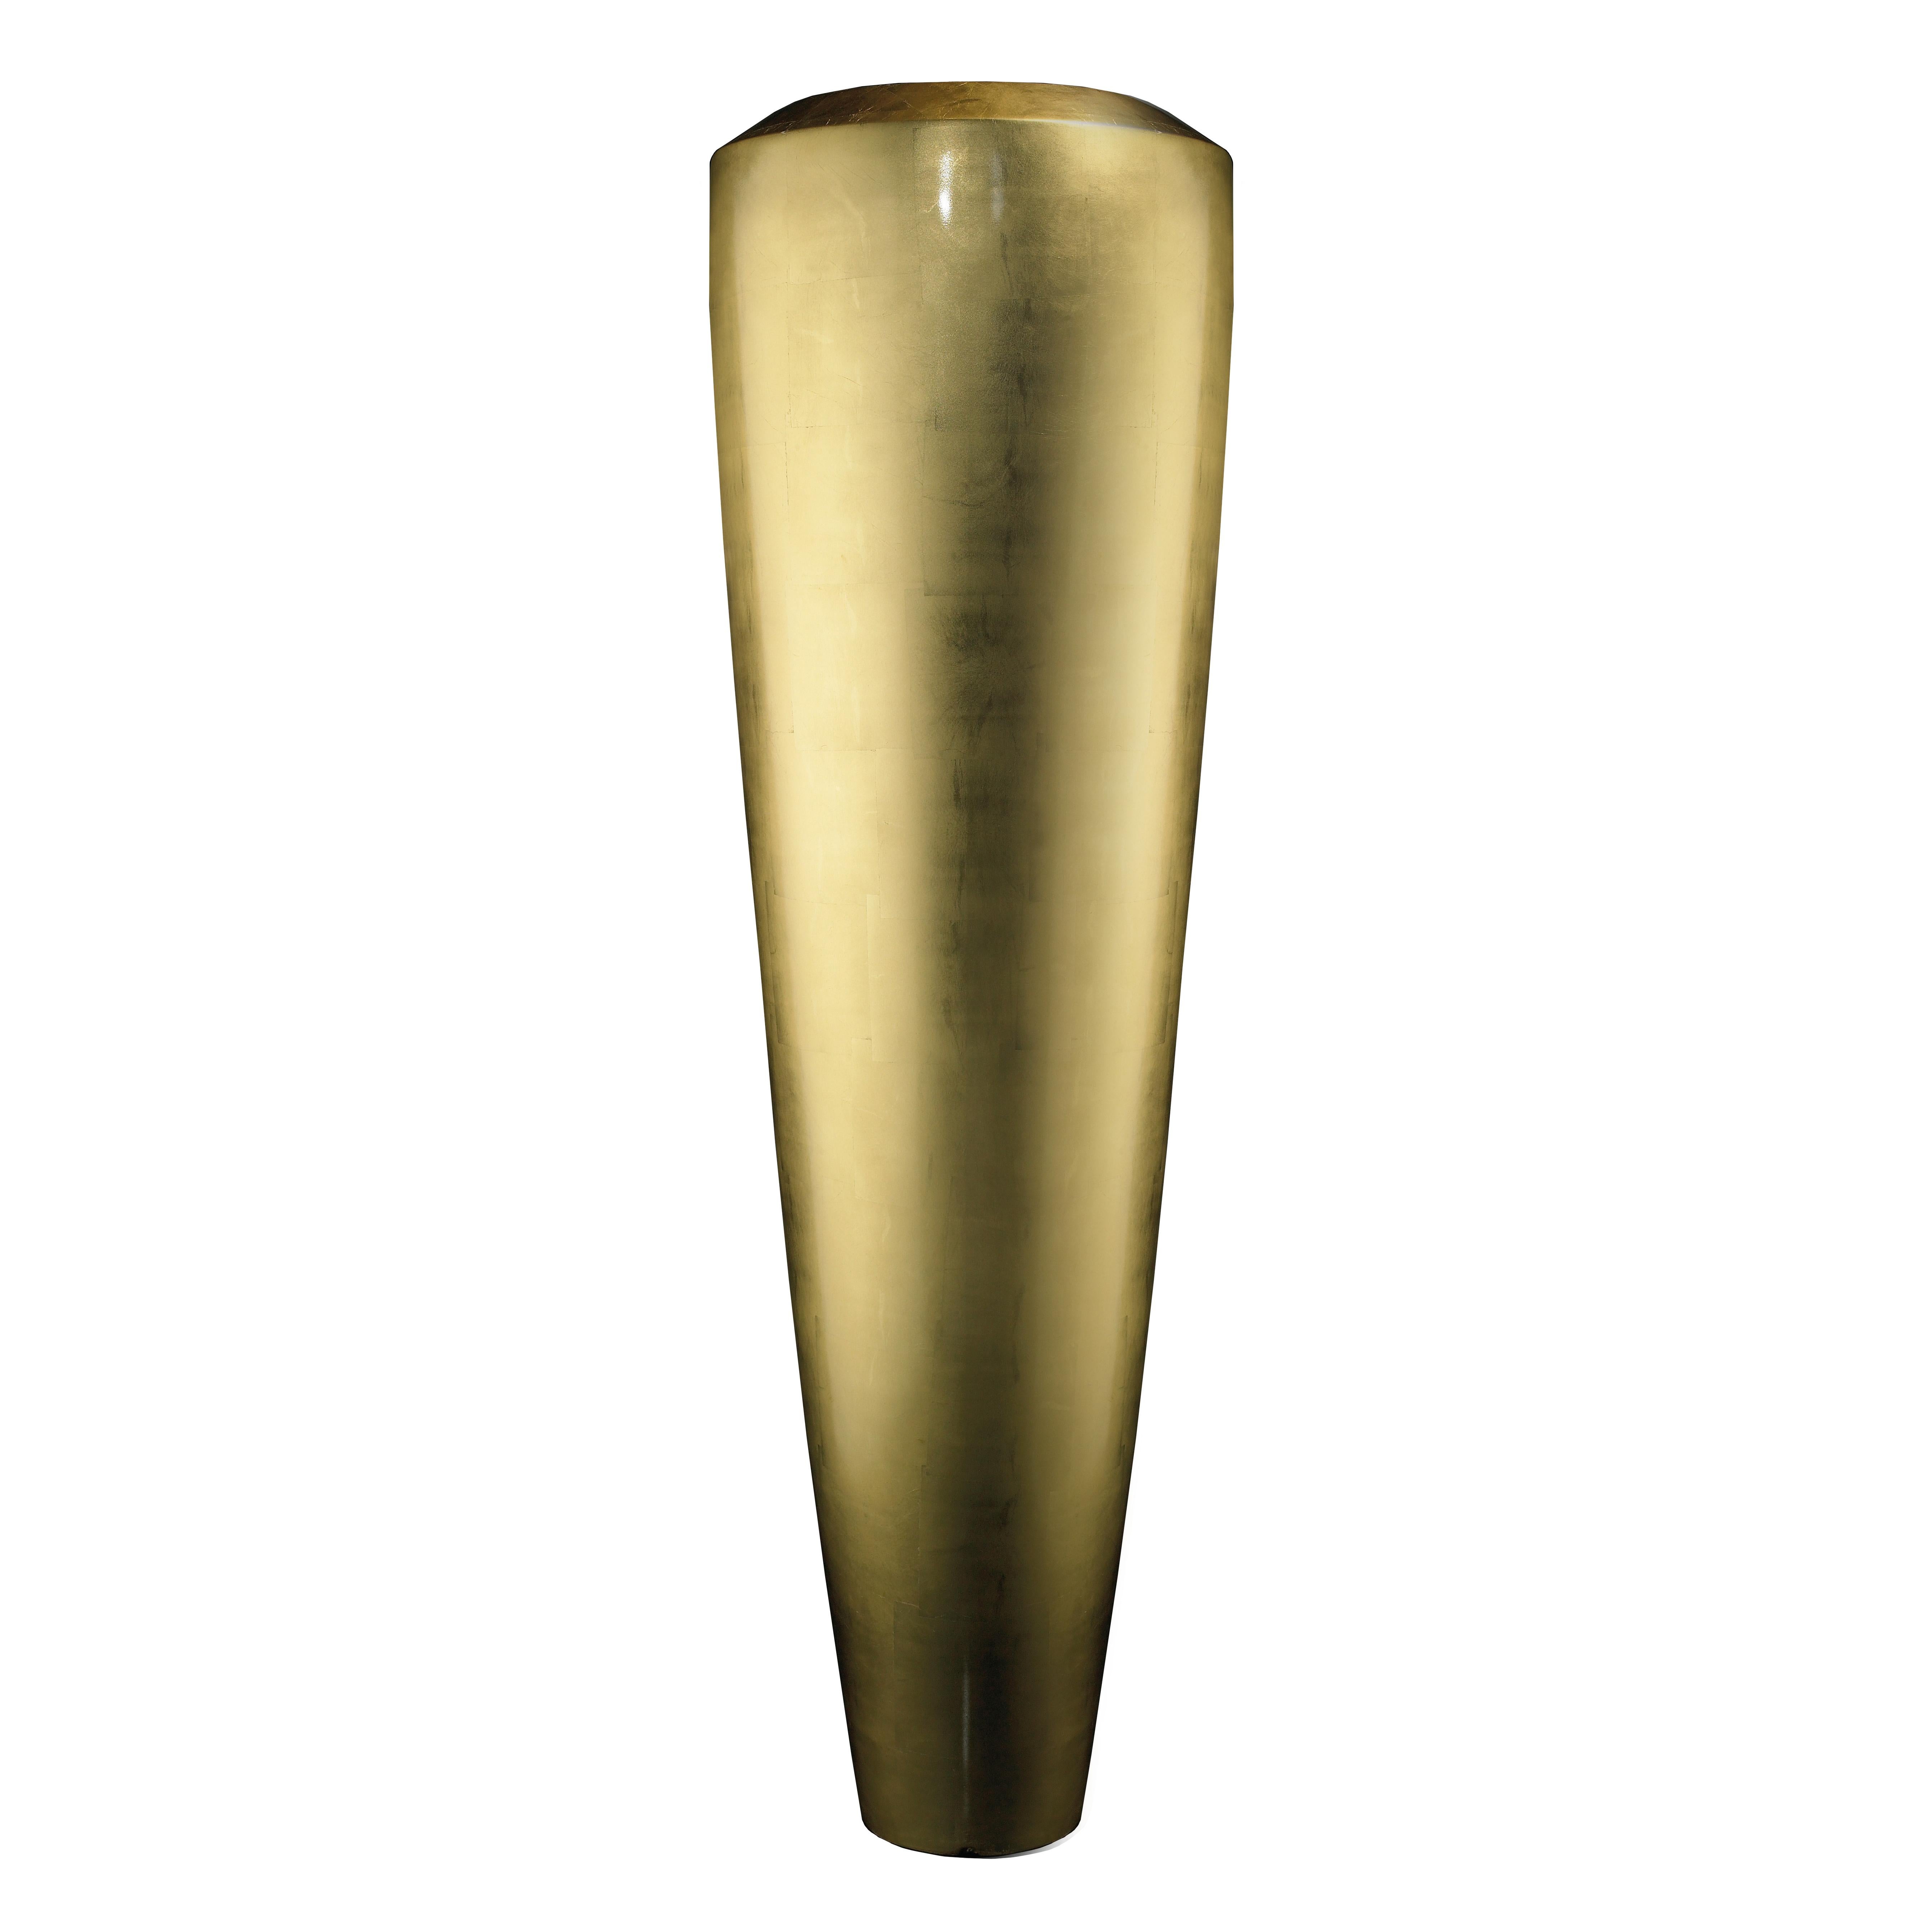 Grand vase Obice, LDPE, intérieur, finition feuille d'or, Italie